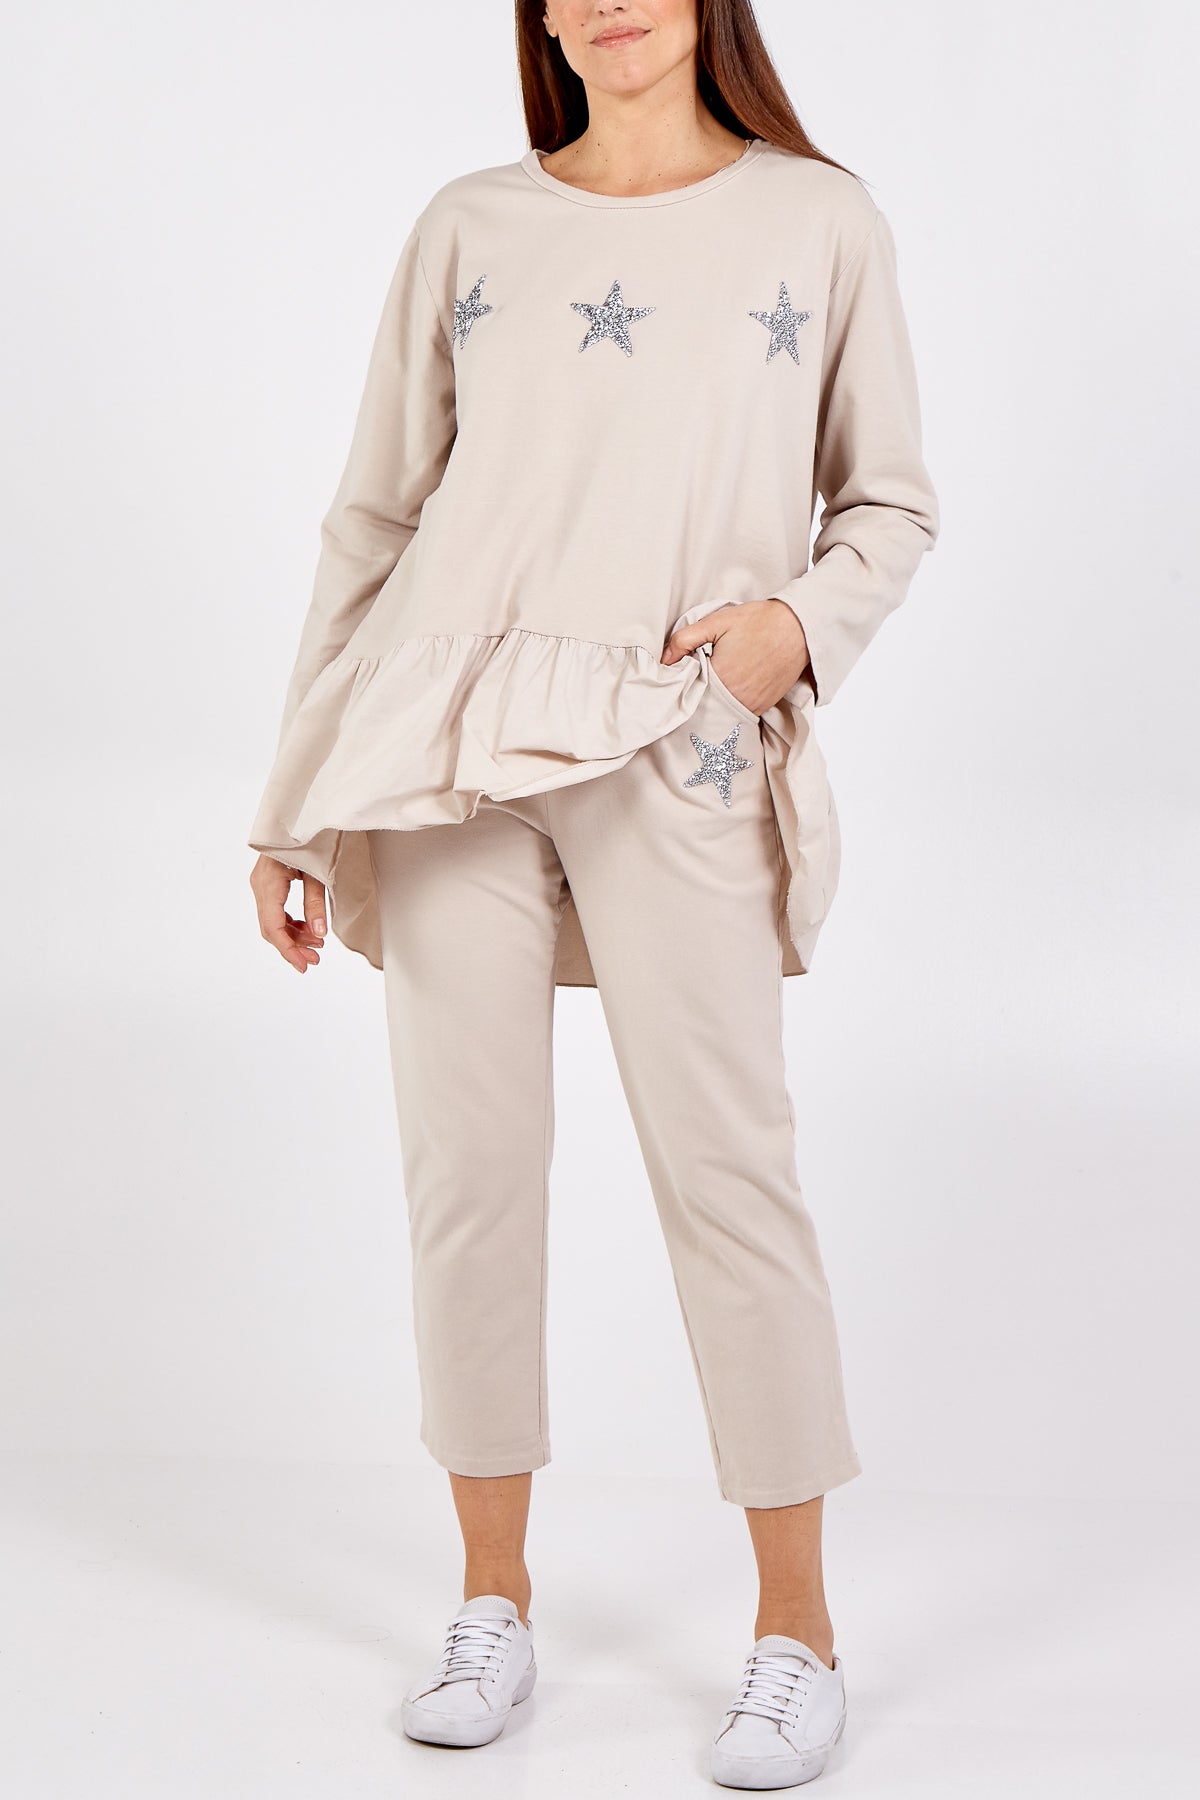 Asymmetrical Frill Hem Glitter Star Loungewear Set